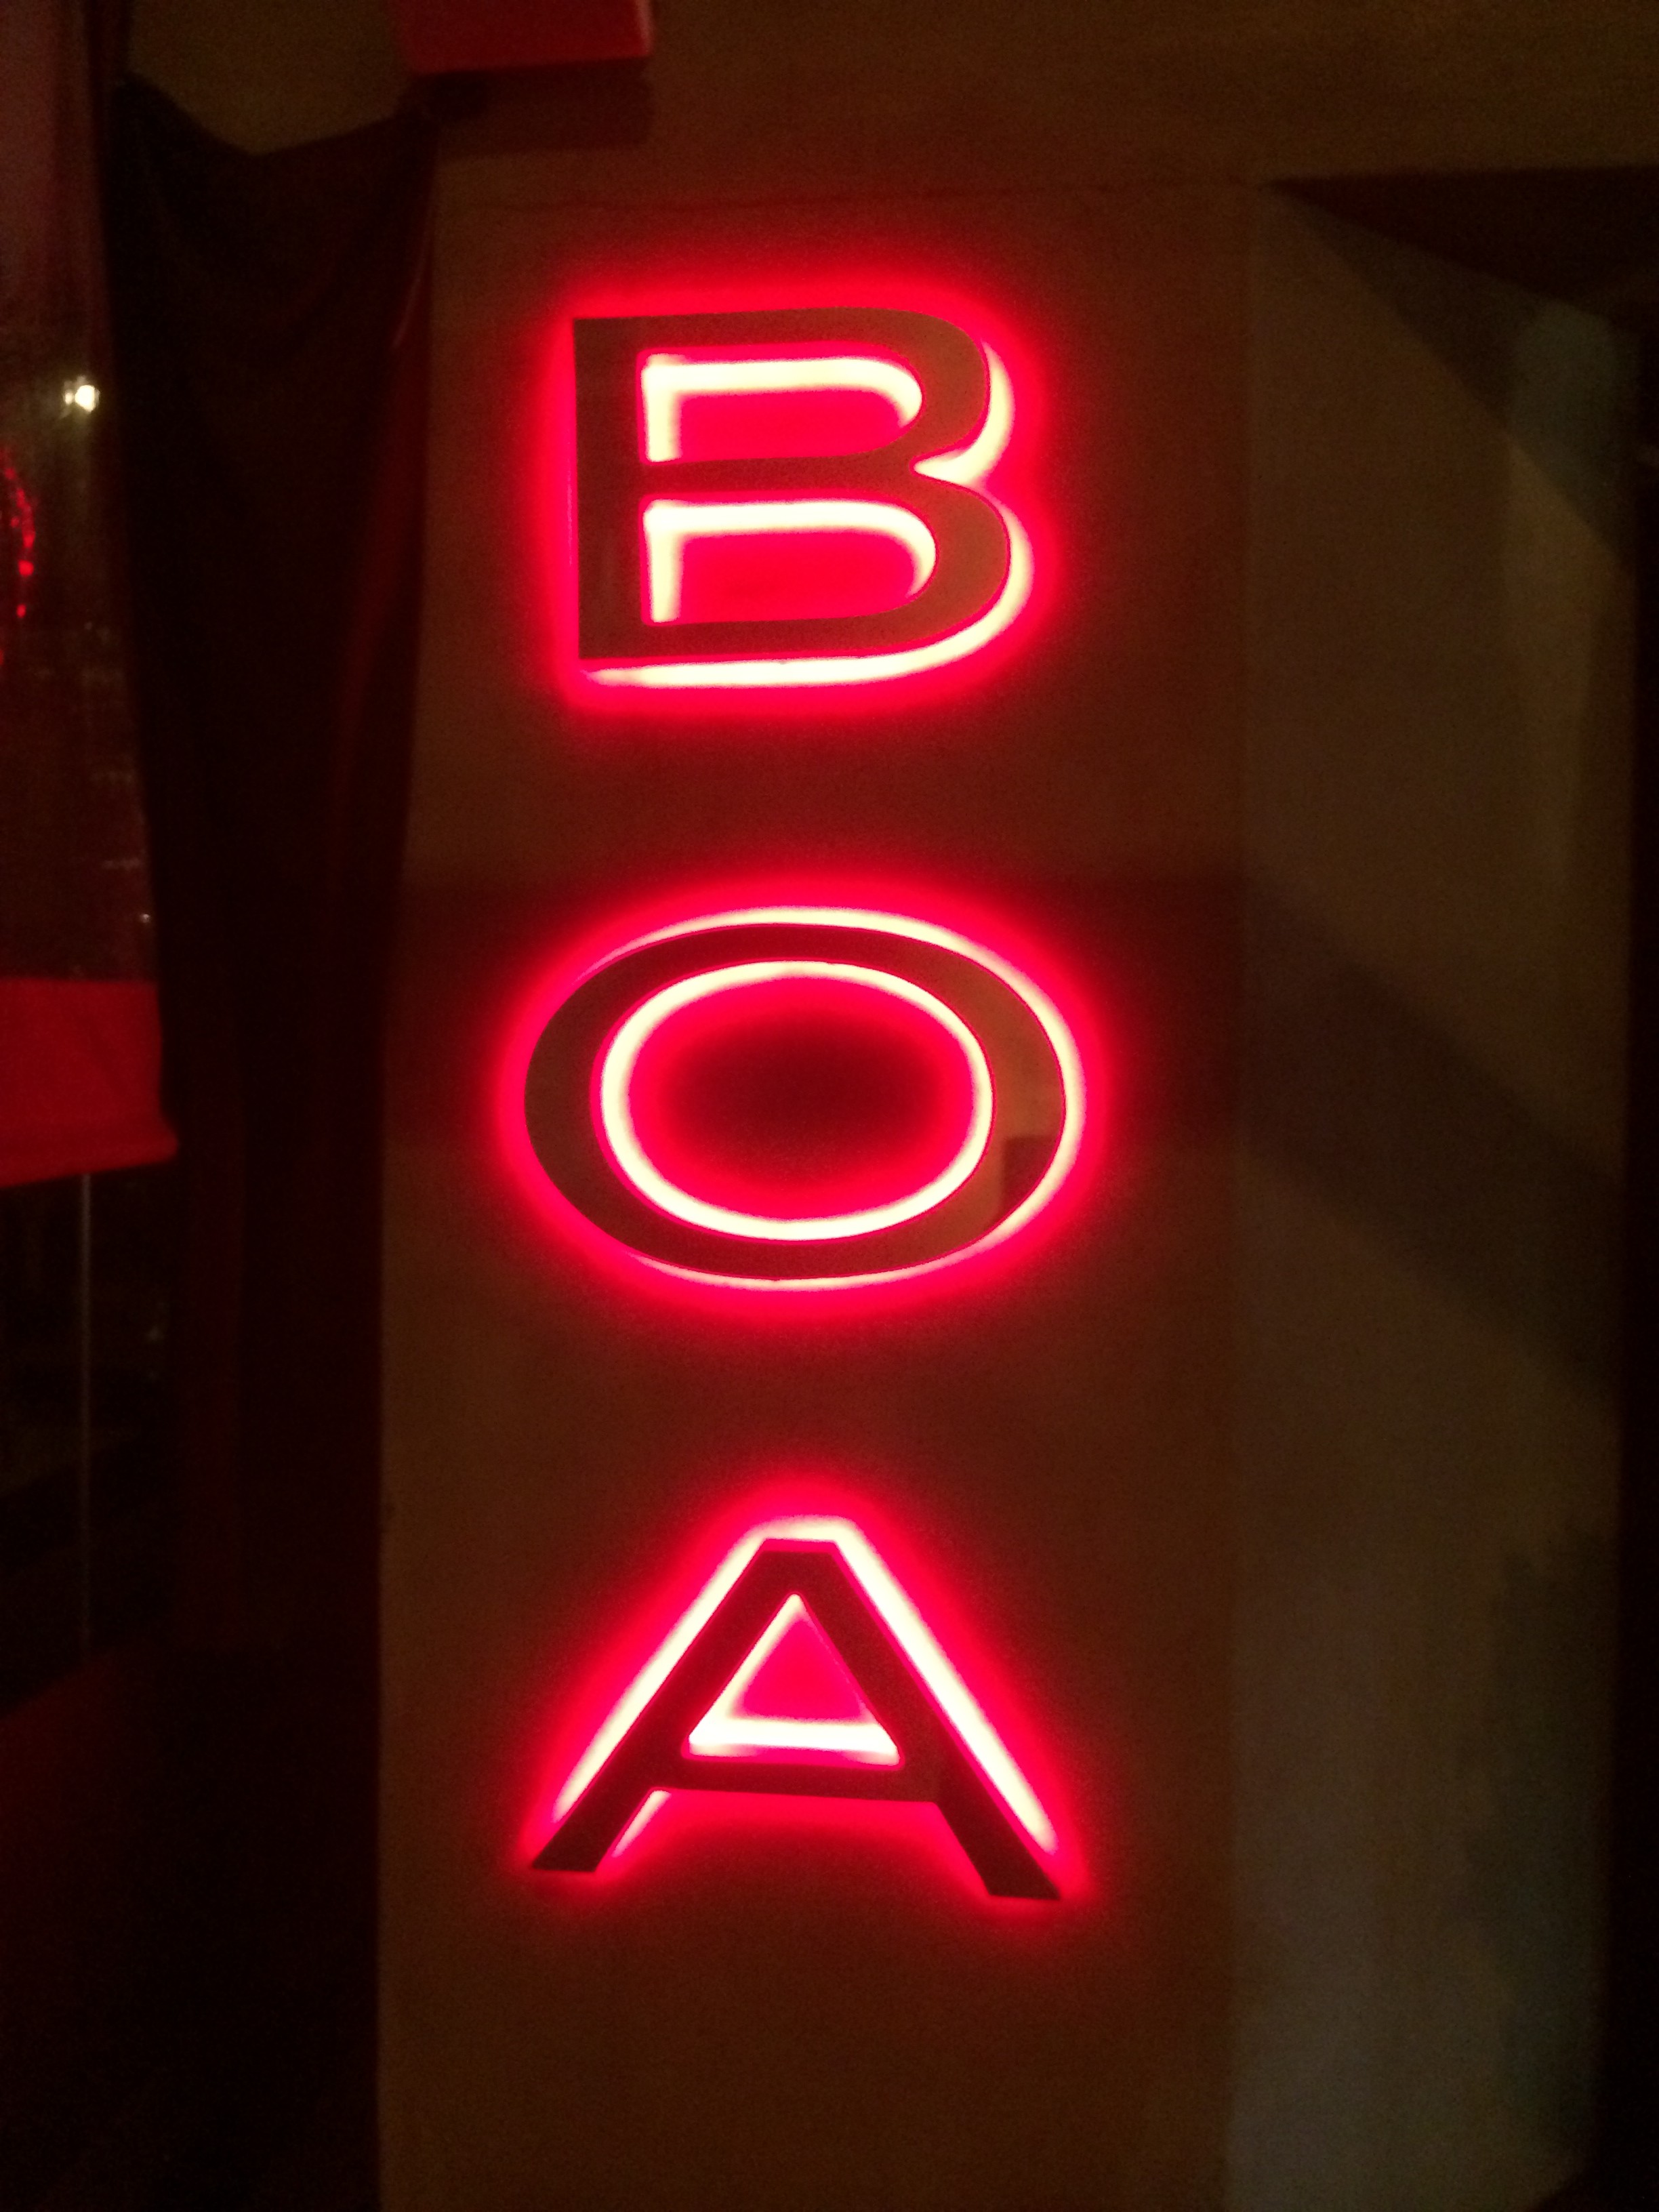 BOA restaurant